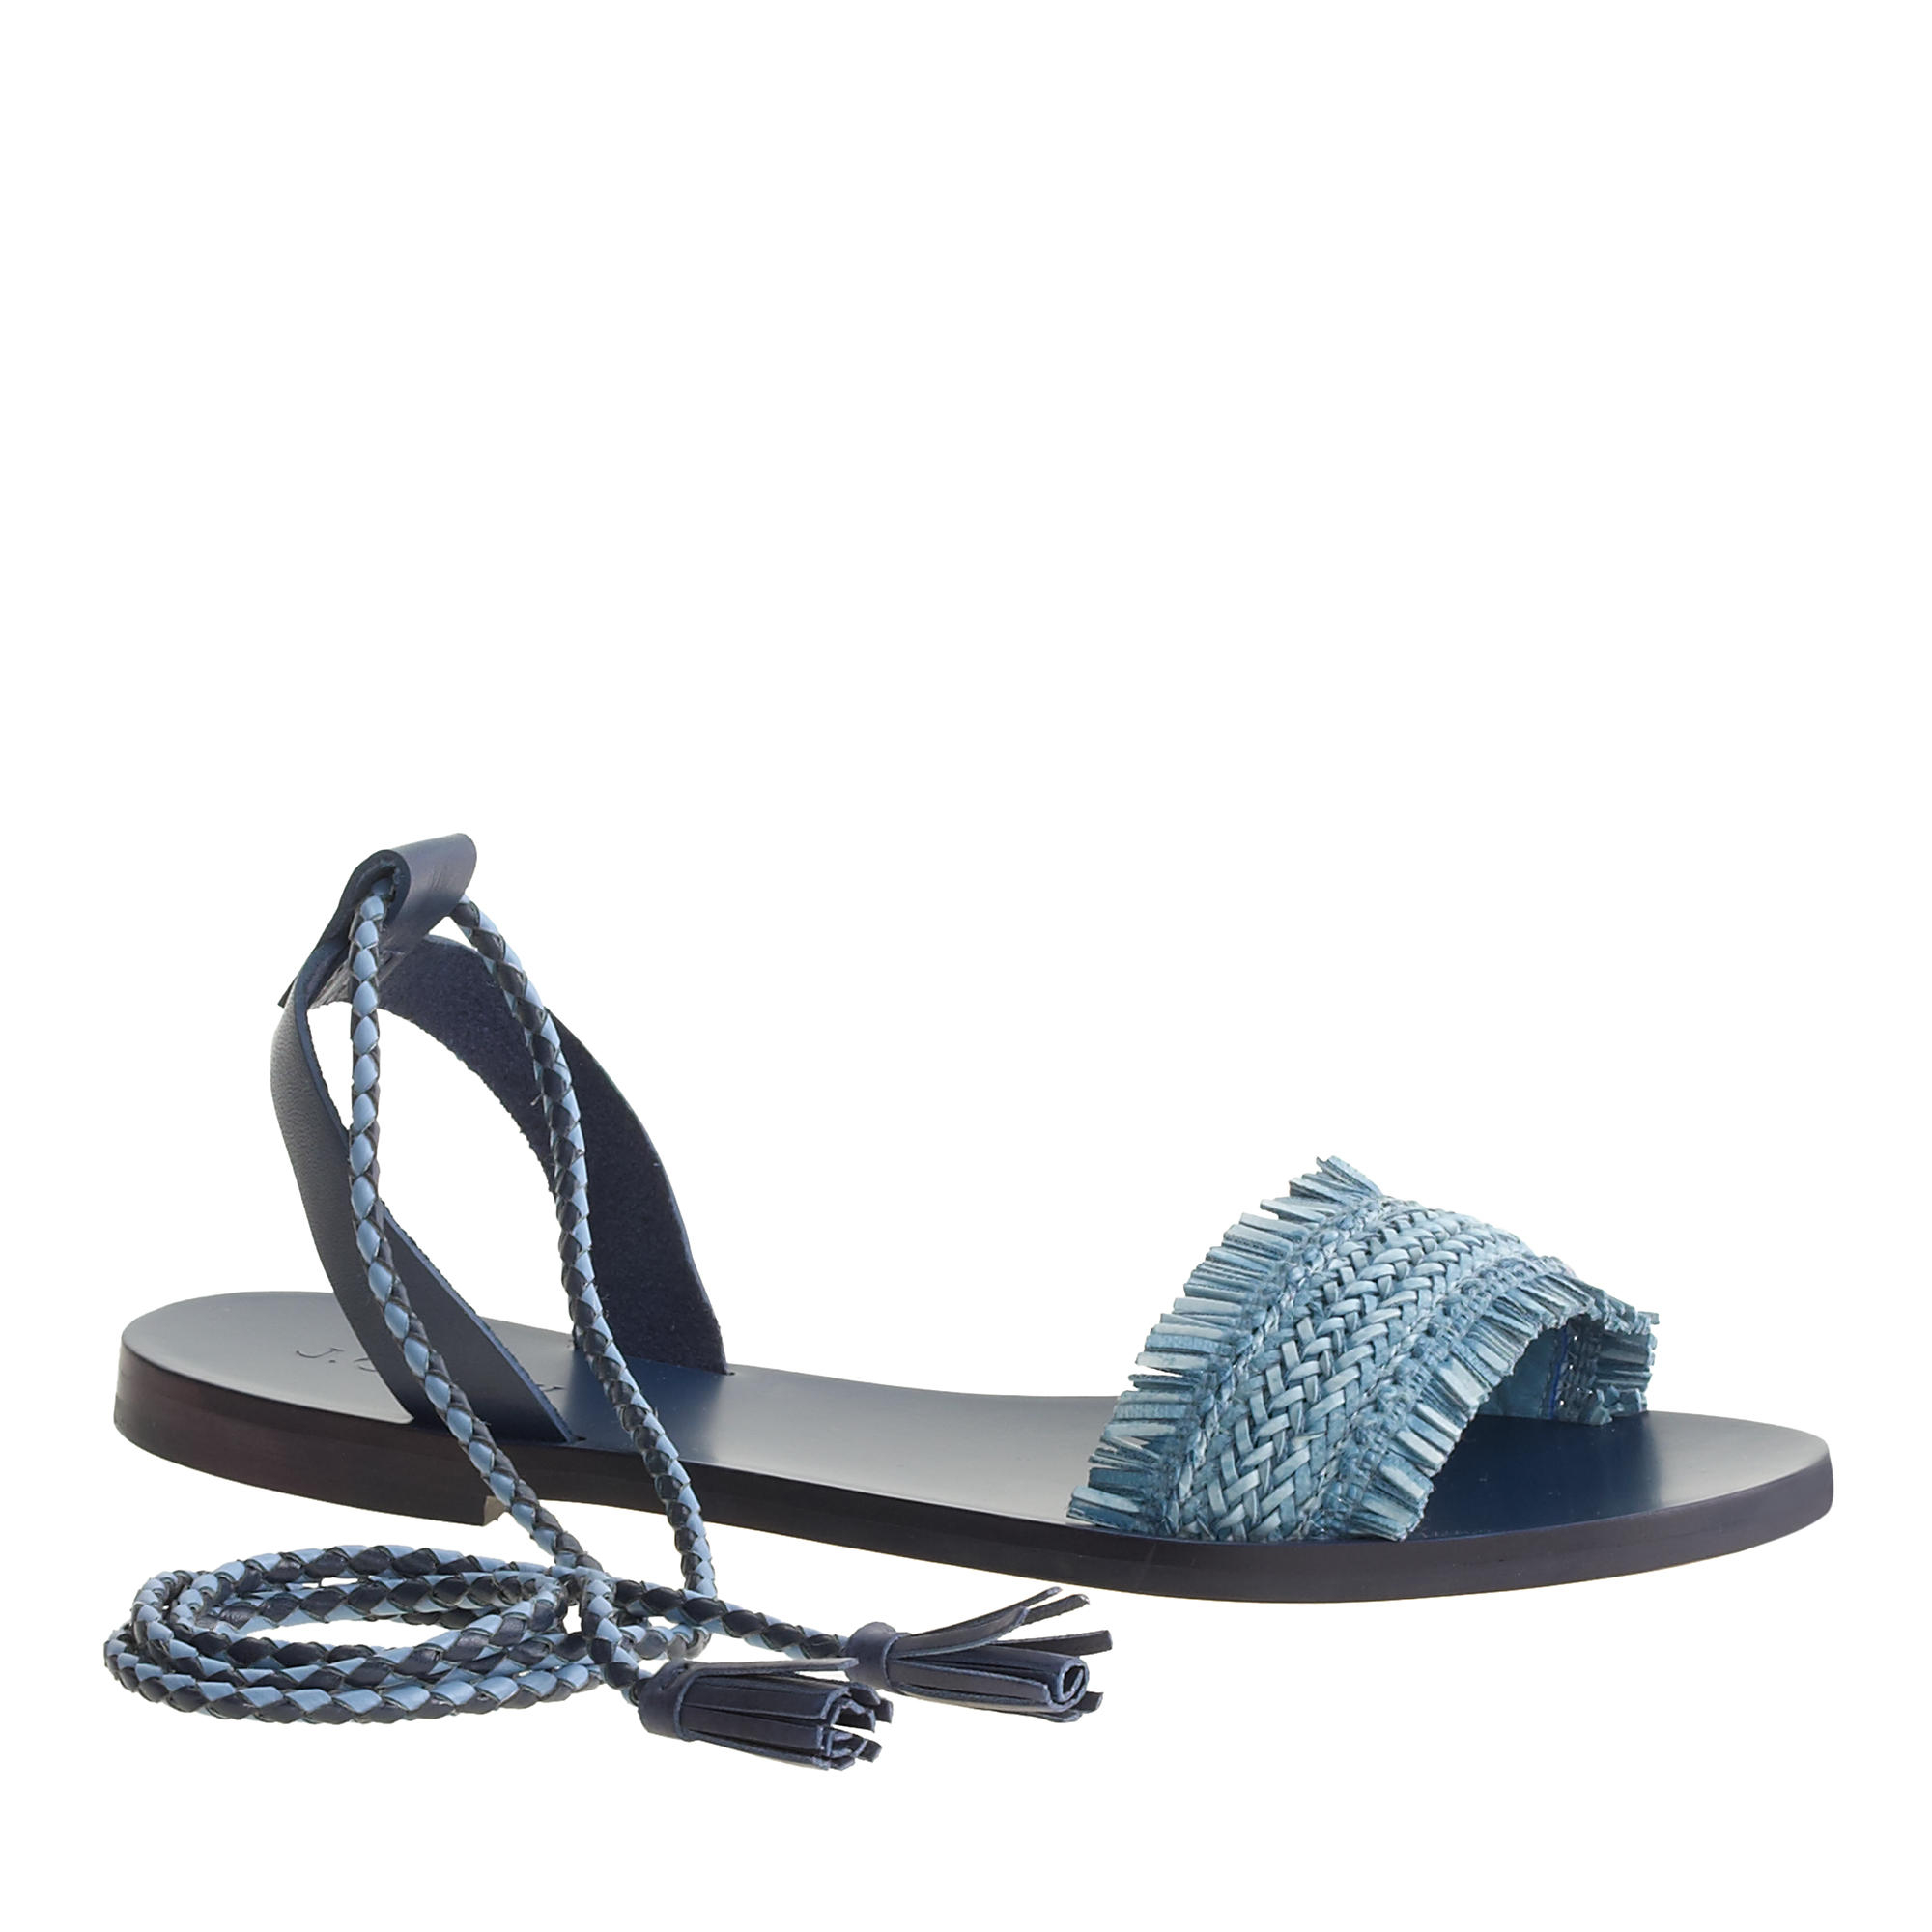 J.crew Raffia Ankle-Tie Sandals in Blue (chatham bay) | Lyst